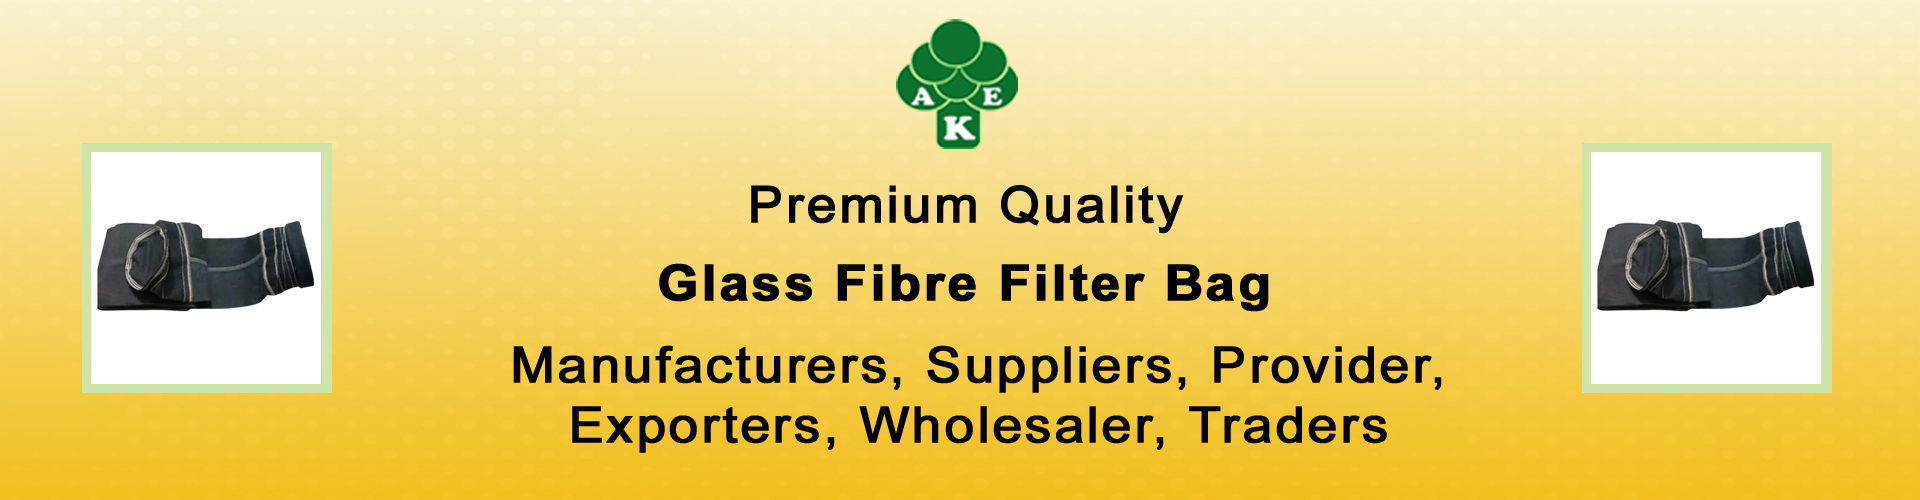 Glass Fibre Filter Bag